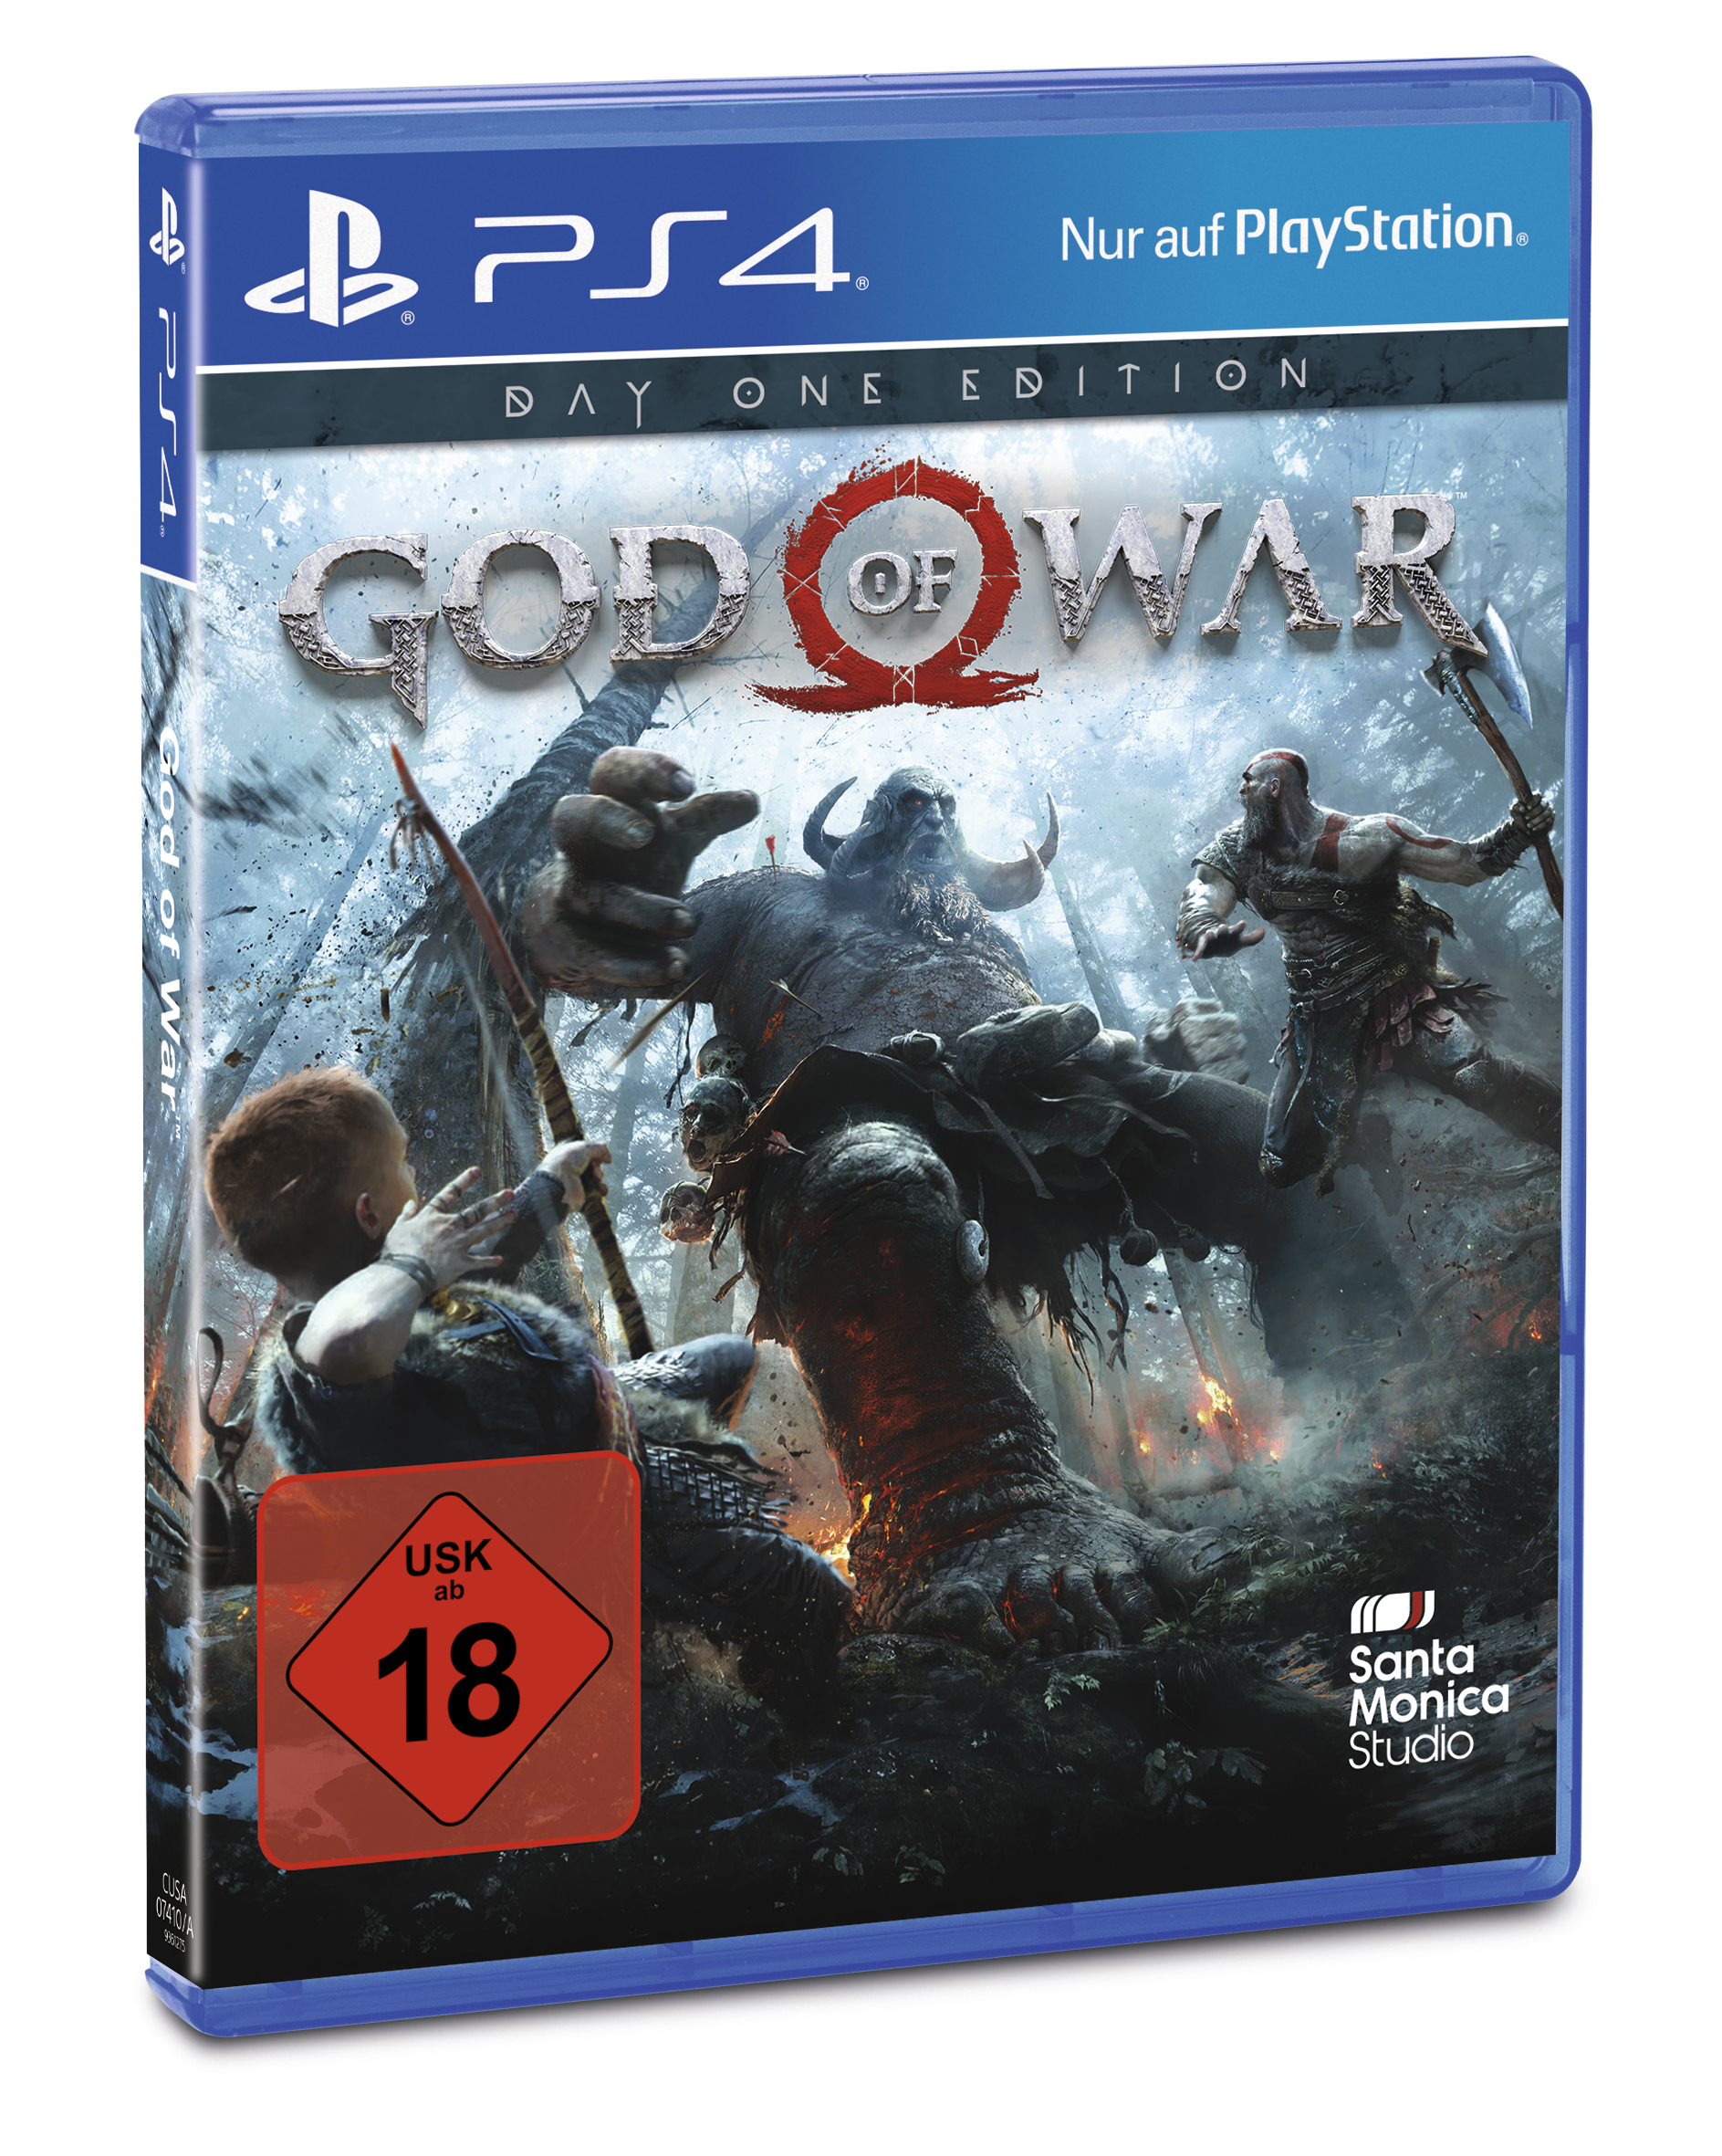 God of War - Day Edition - 4] [PlayStation One